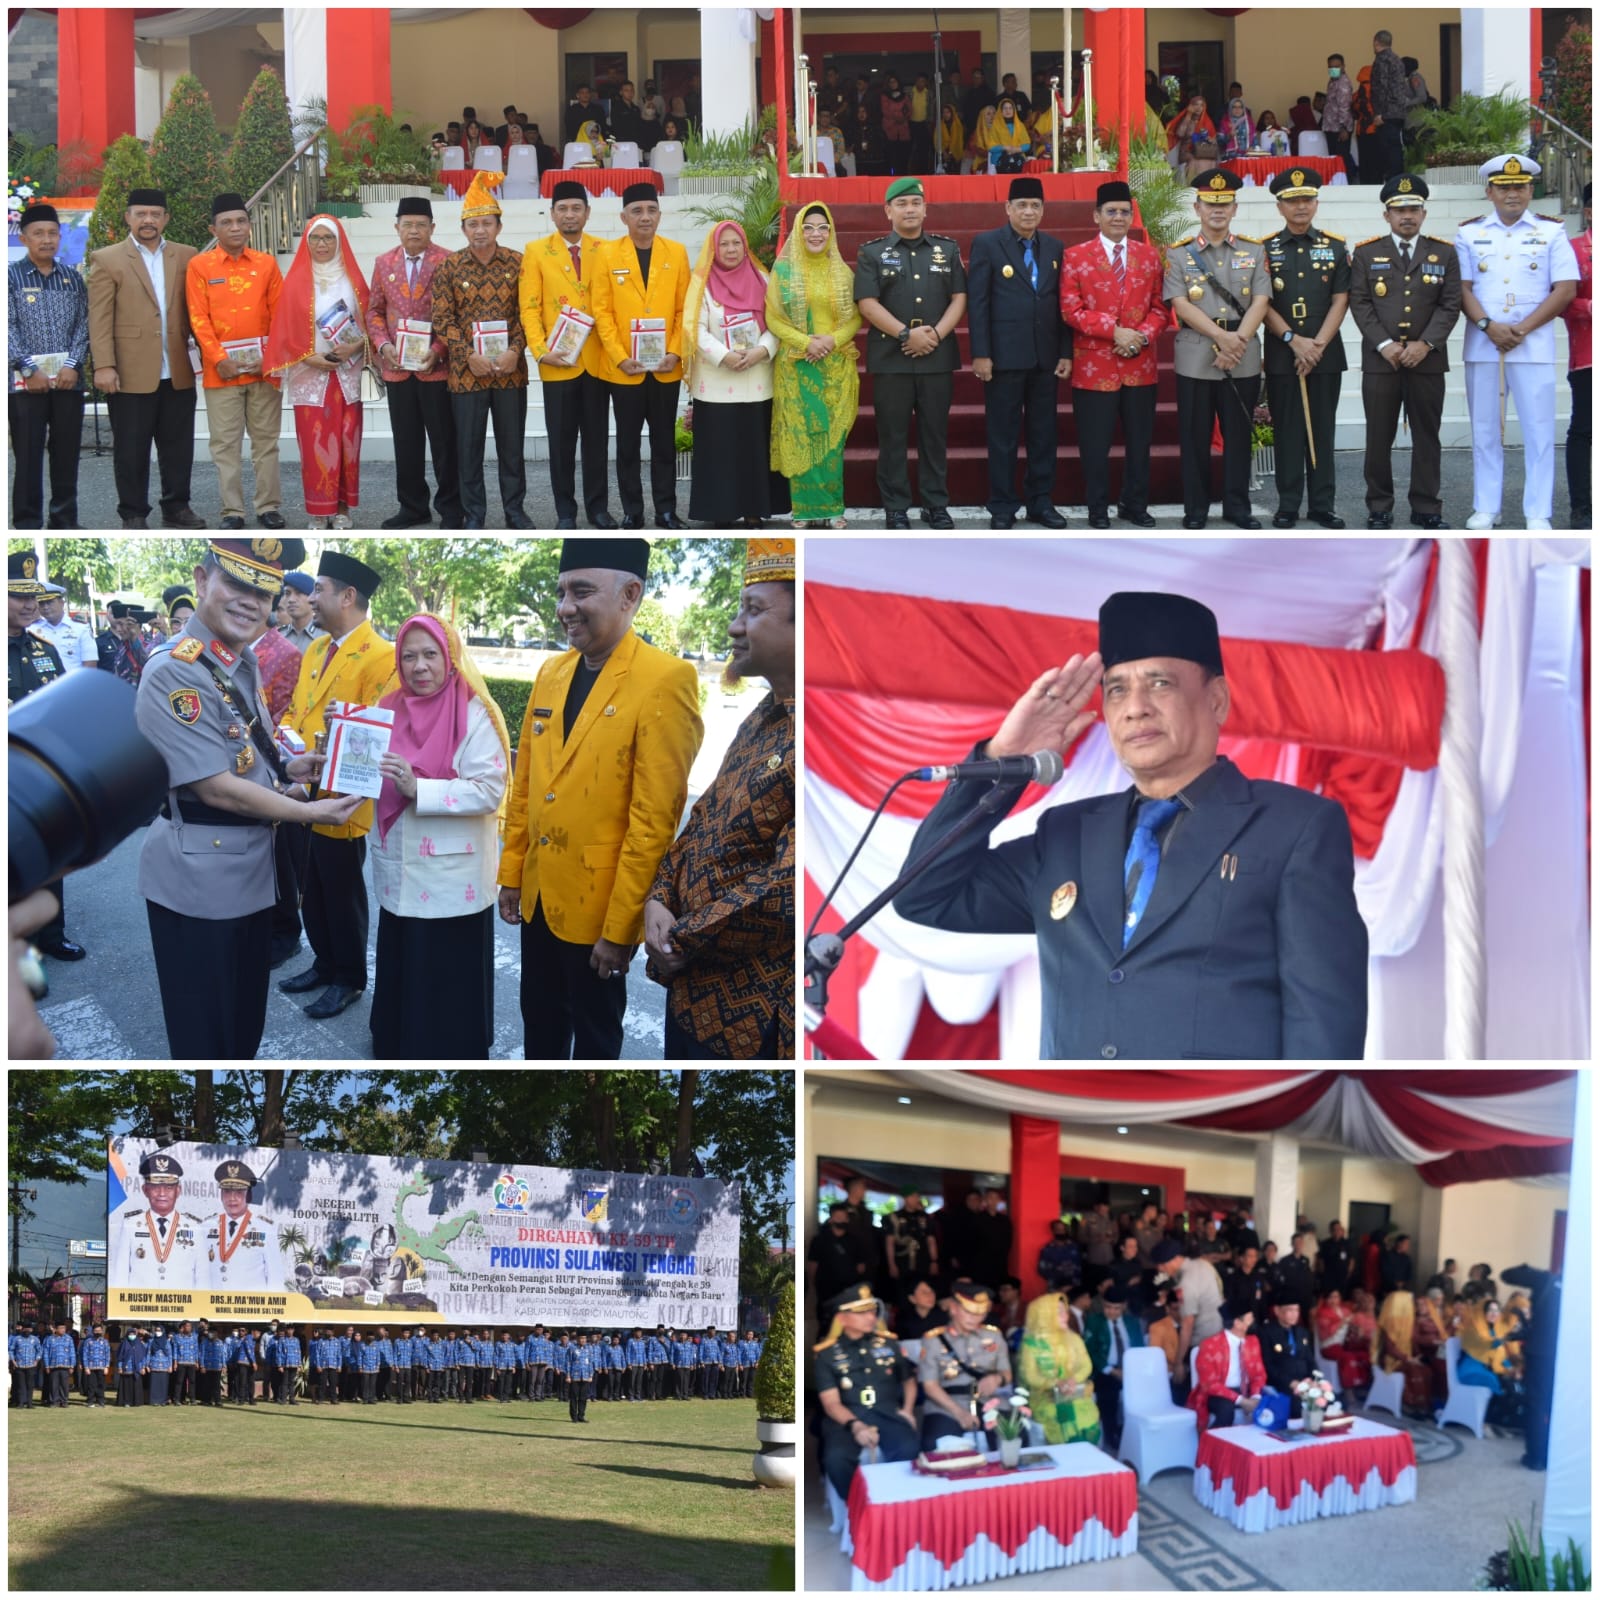 Dipimpin Wagub Sulteng, Wawali Palu Hadiri Peringatan HUT 59 Provinsi Sulawesi Tengah